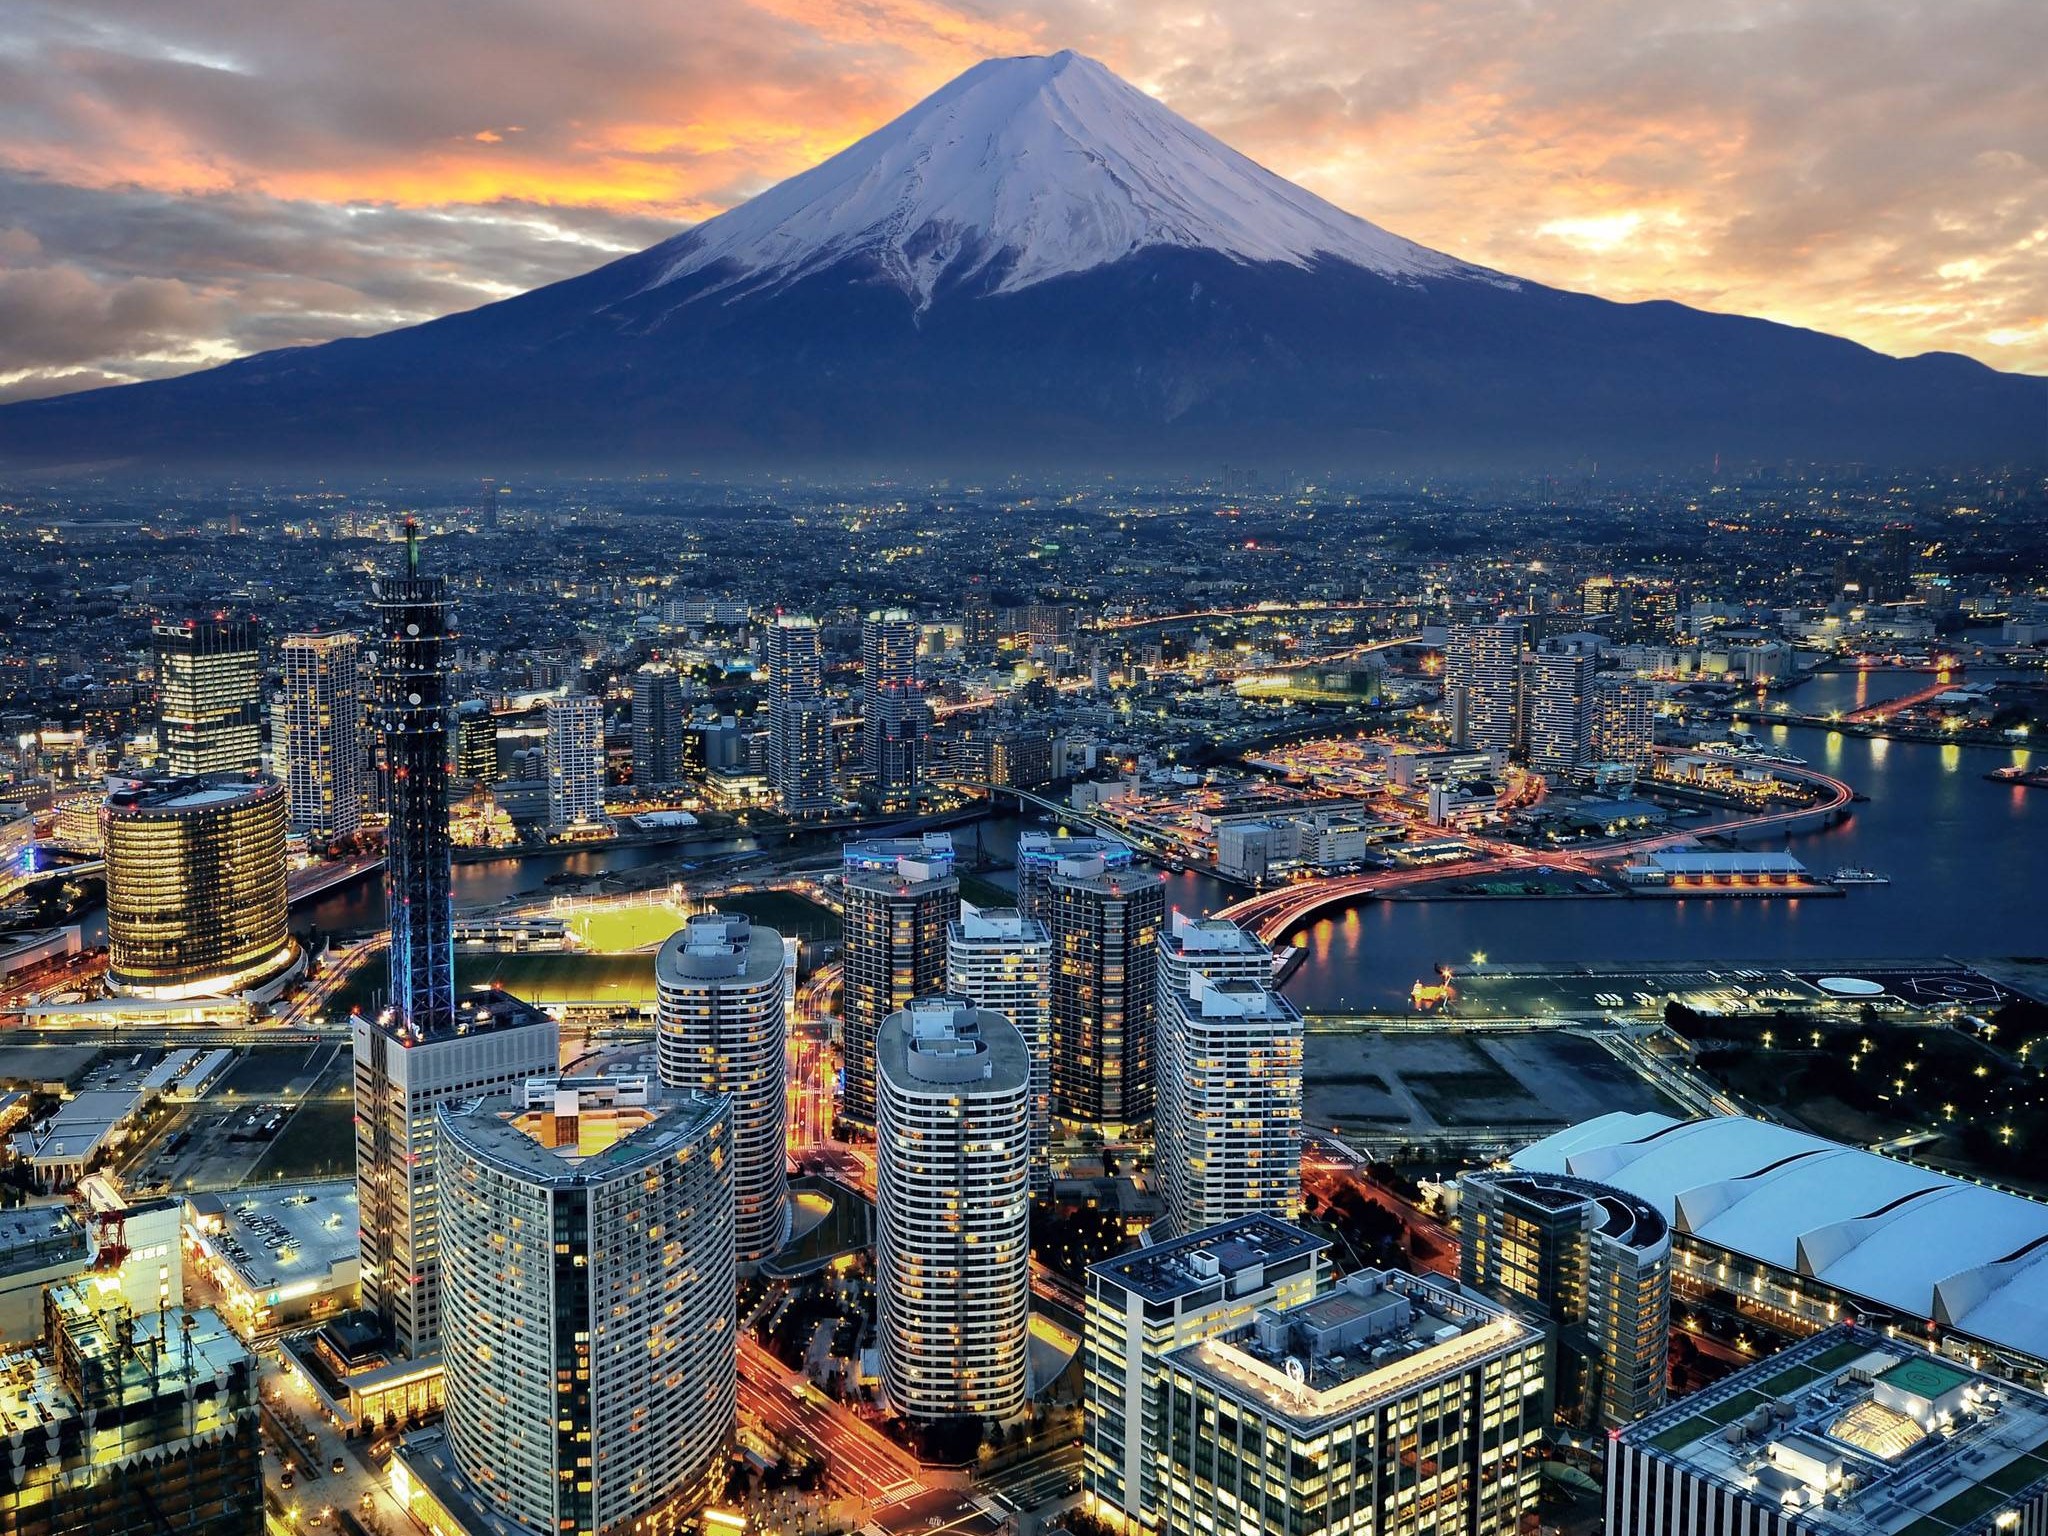 Yokohama City With Panoramic View of Mount Fuji